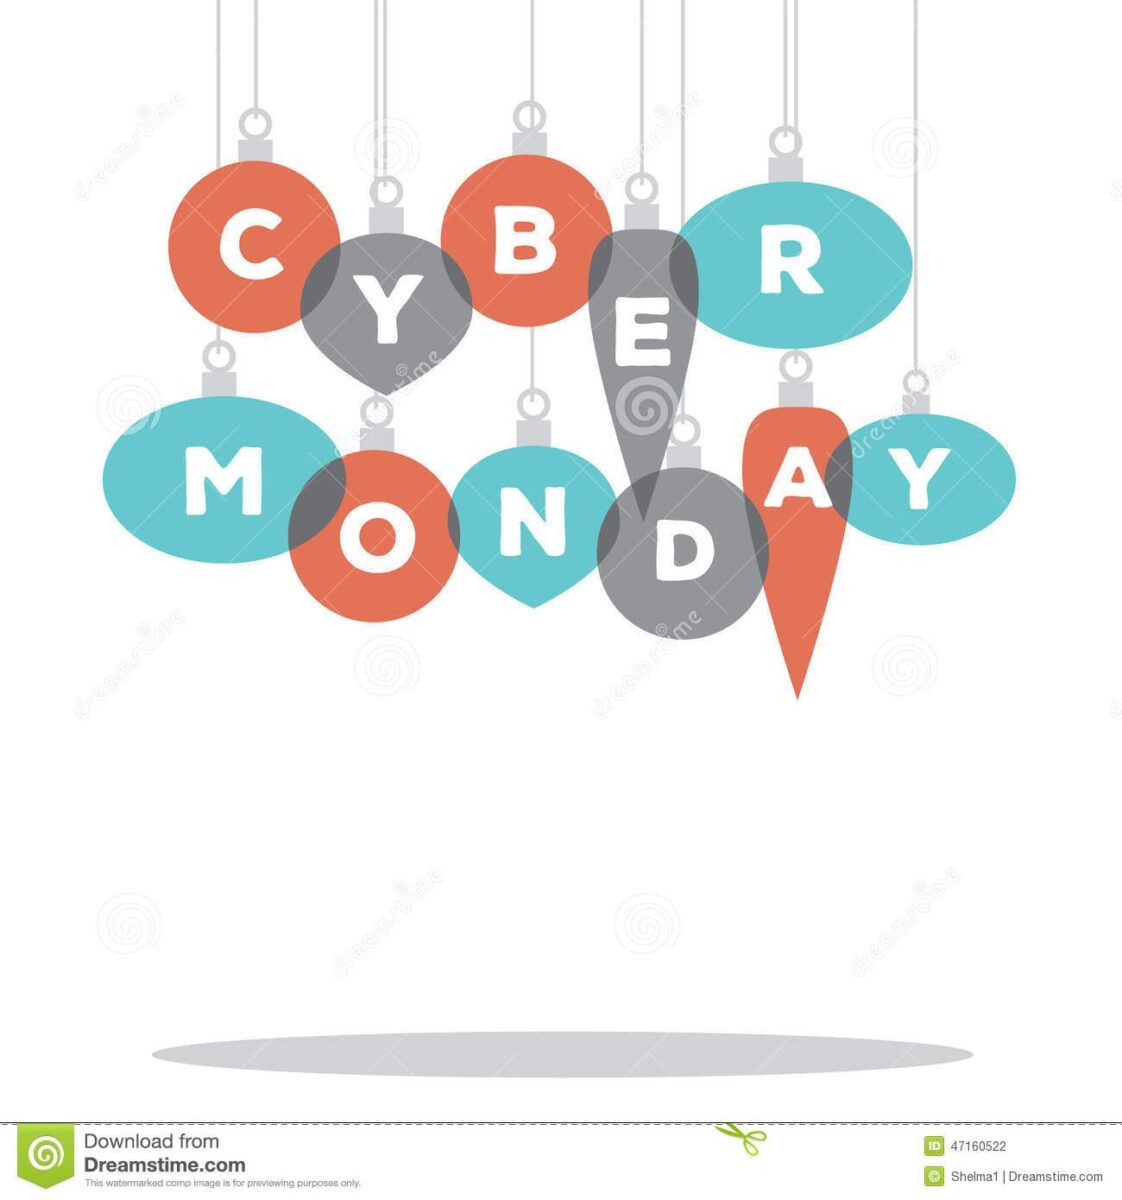 cyber-monday-spelled-christmas-ornaments-eps-illustration-47160522